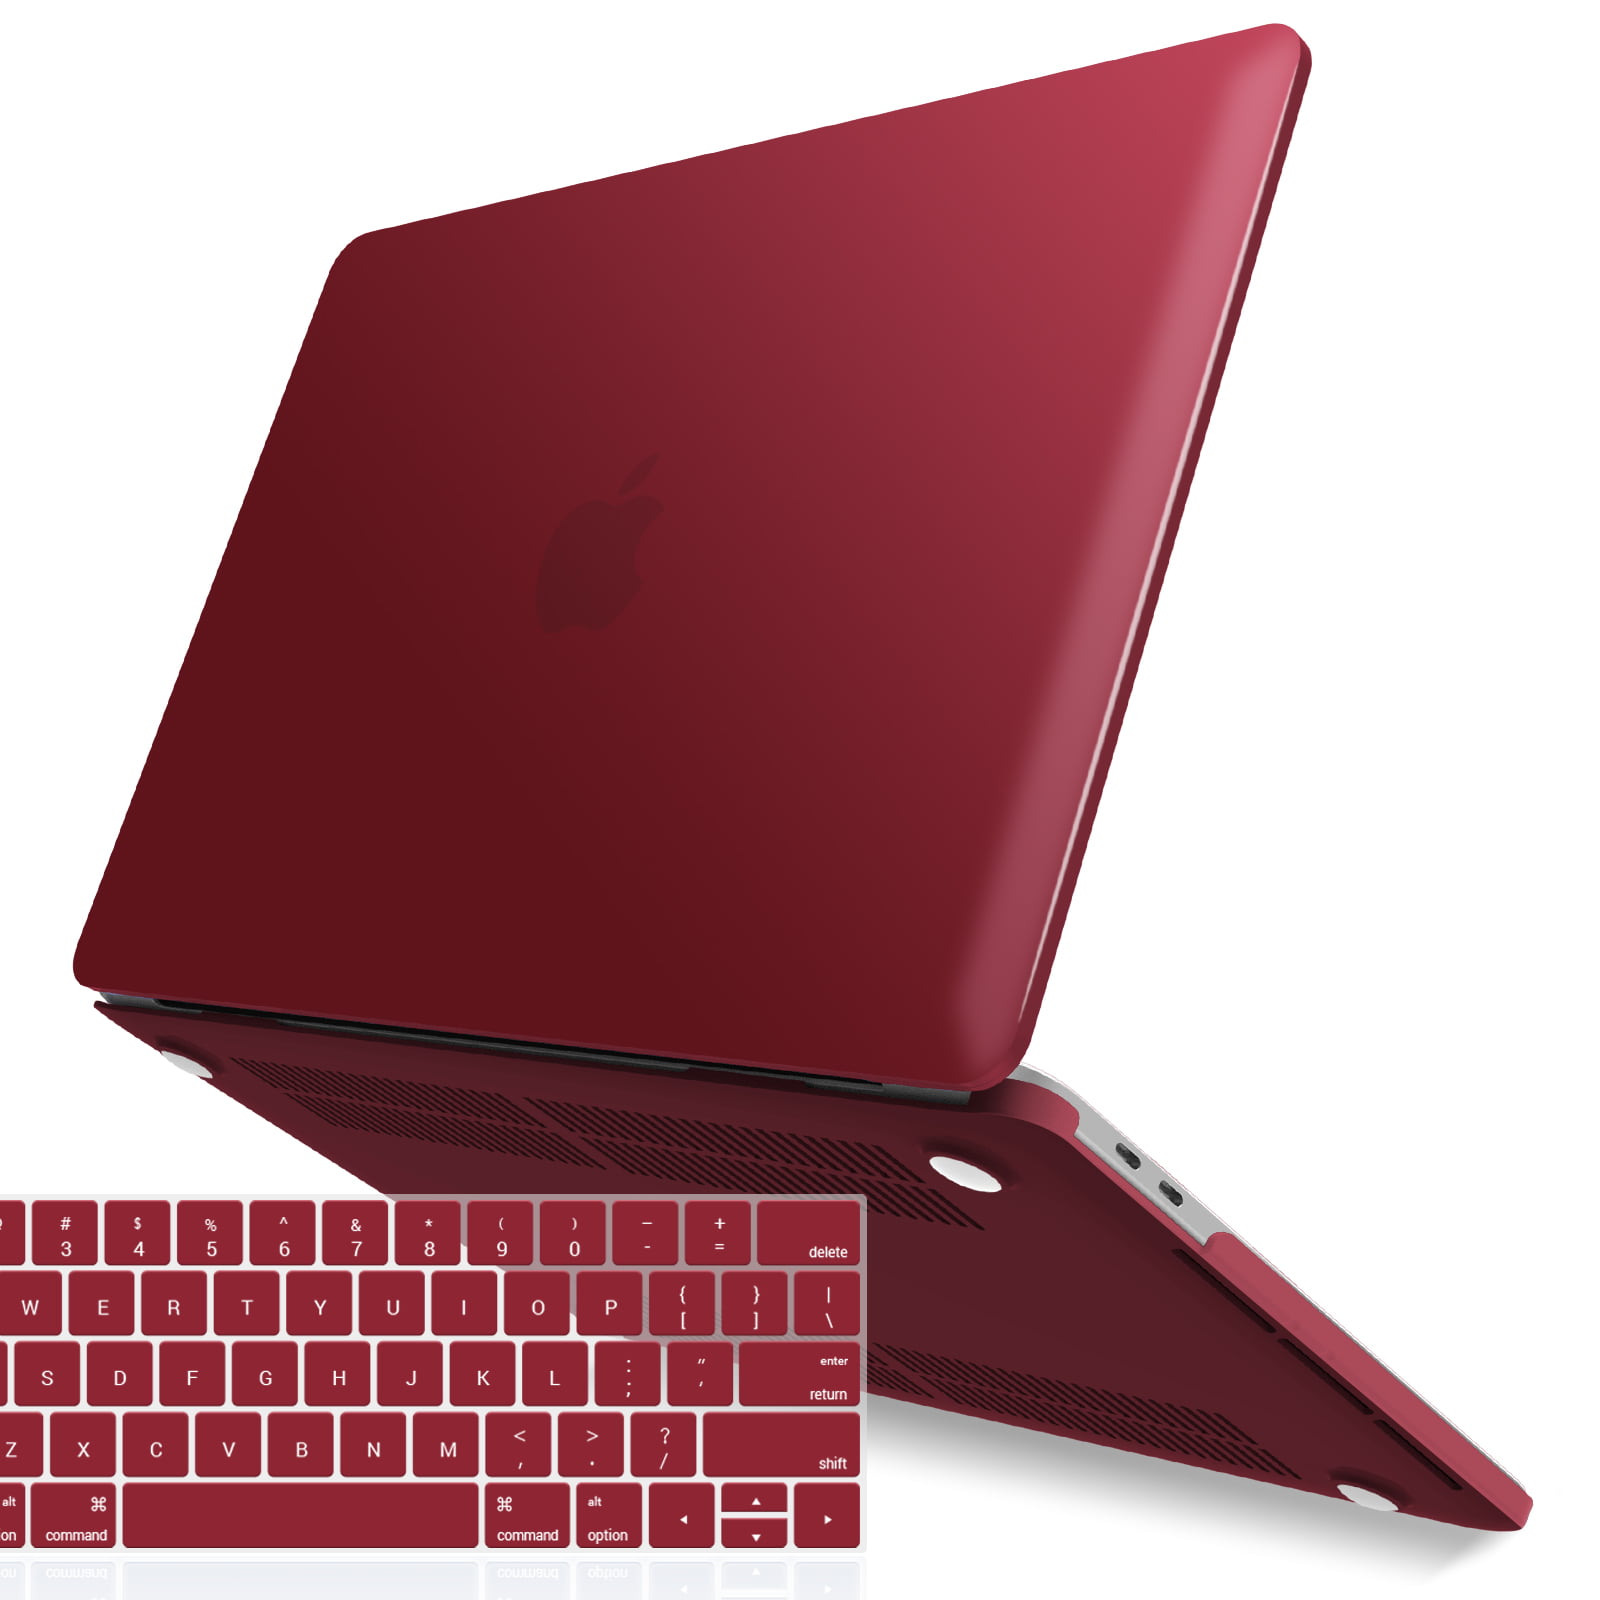 IBENZER MacBook Pro 13 Inch Case 2020 2019 2018 2017 2016 A2159 A1989 A1706 A1708, Hard Shell